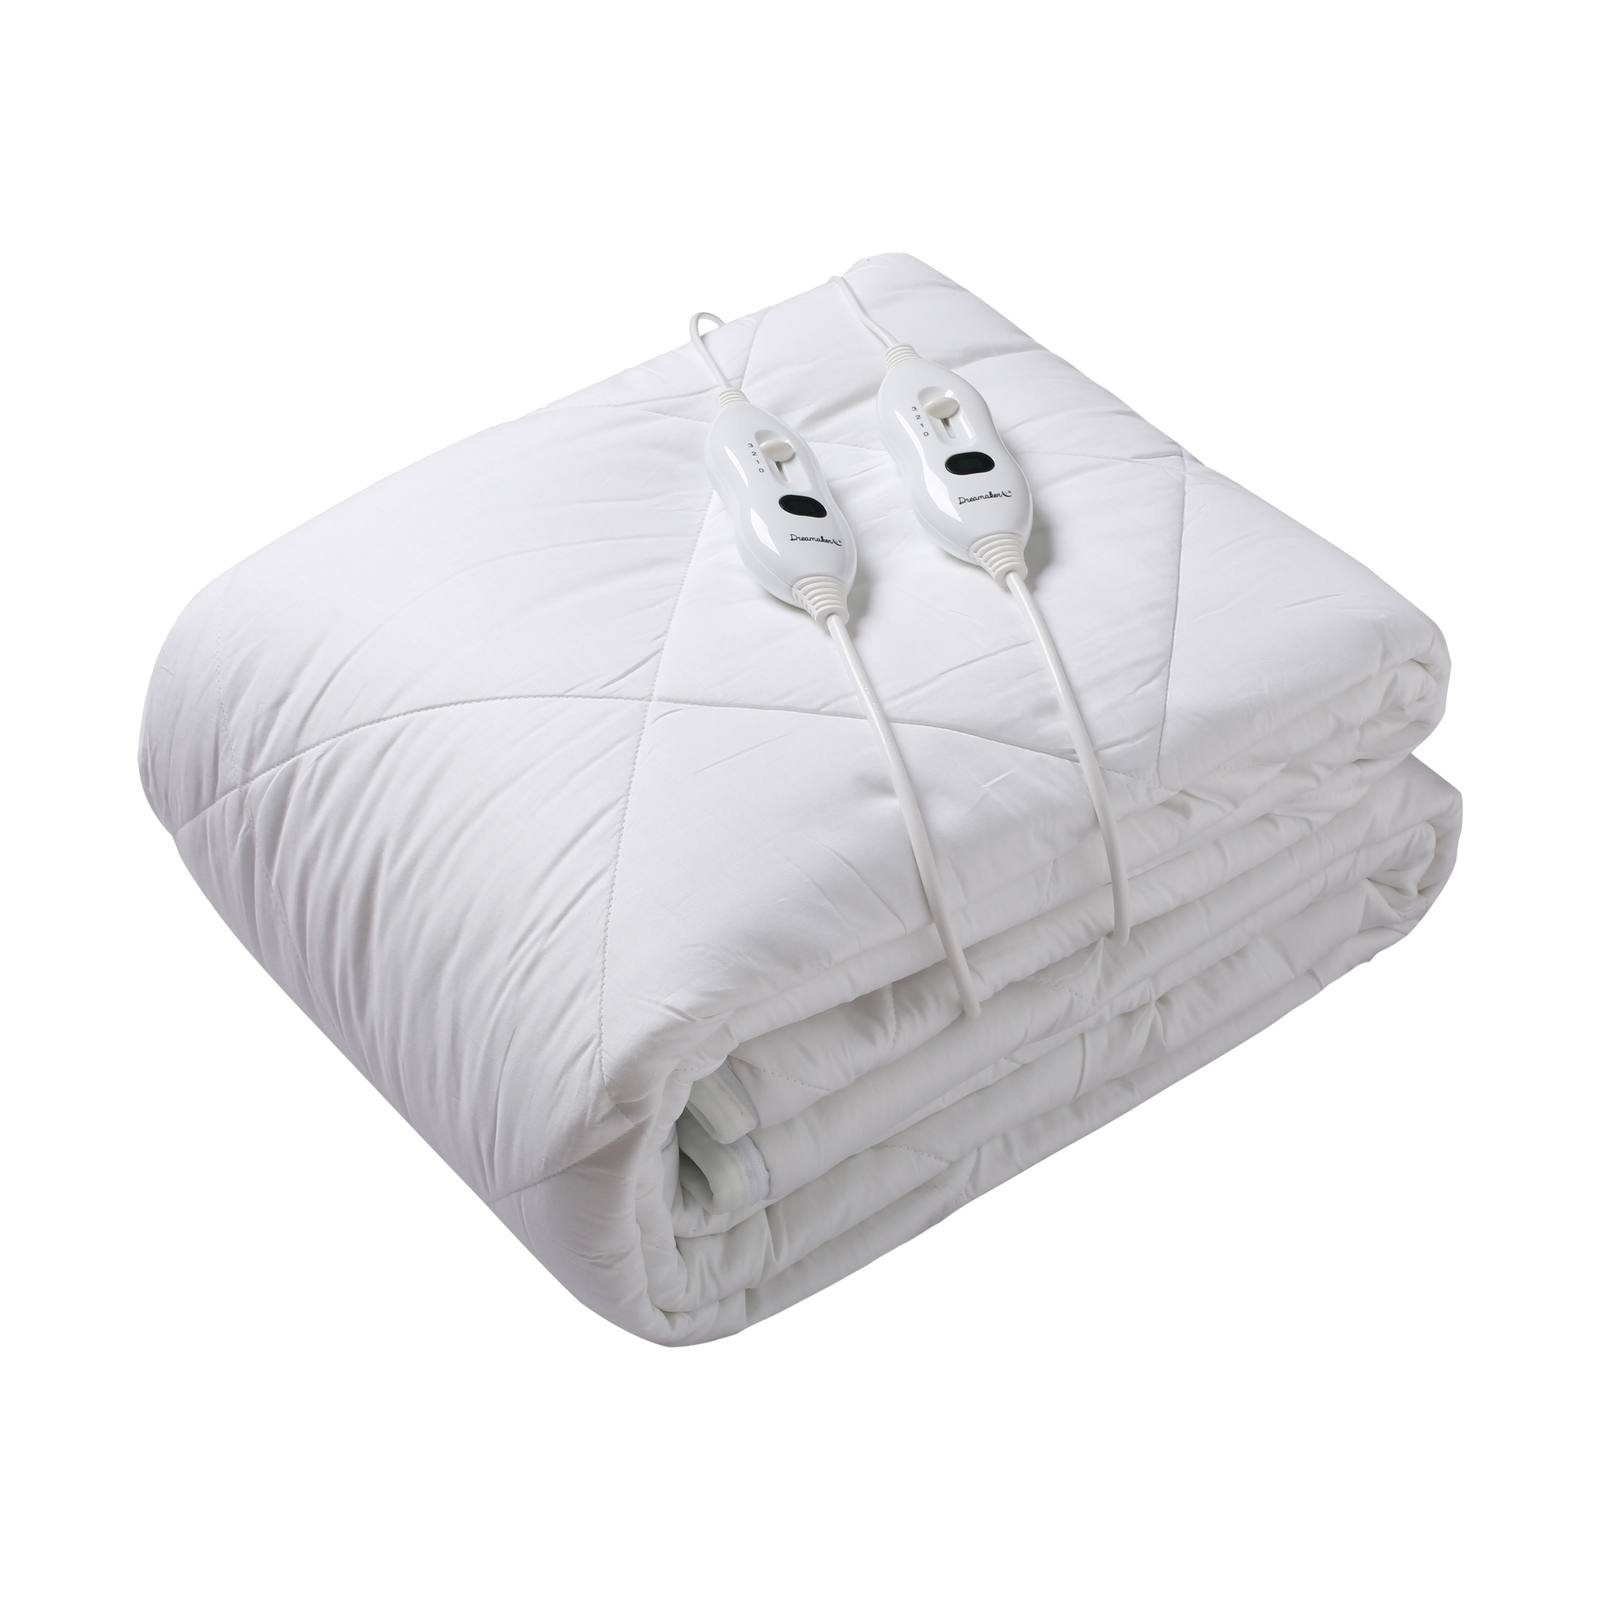 Dreamaker Waterproof 100 Cotton Cover Electric Blanket Queen Bed